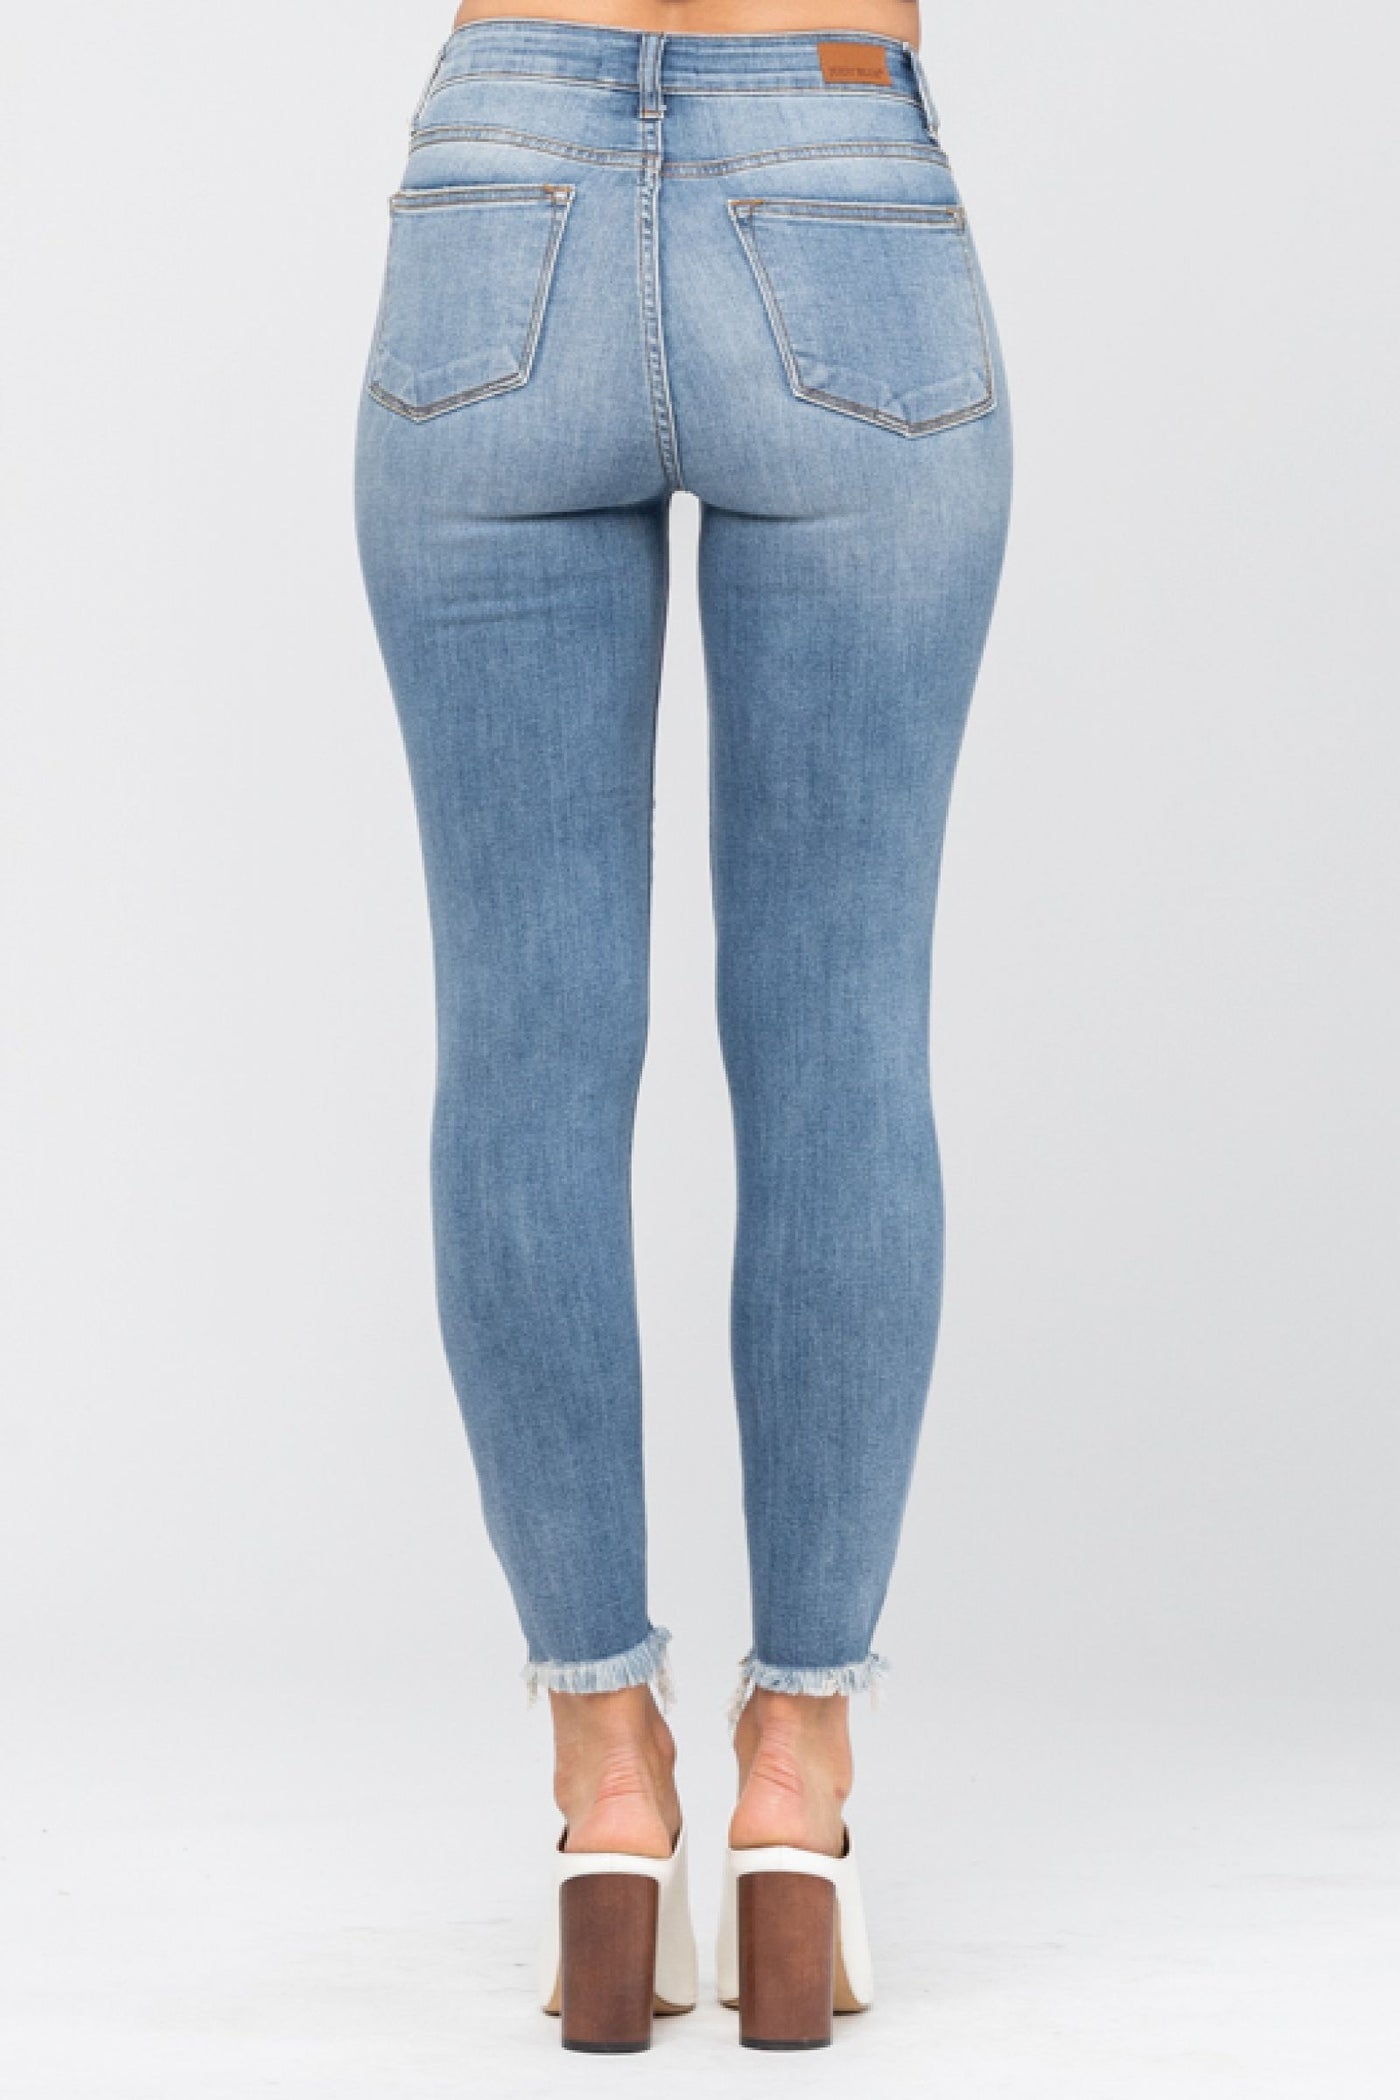 Judy Blue Jeans Fray Hem Skinny